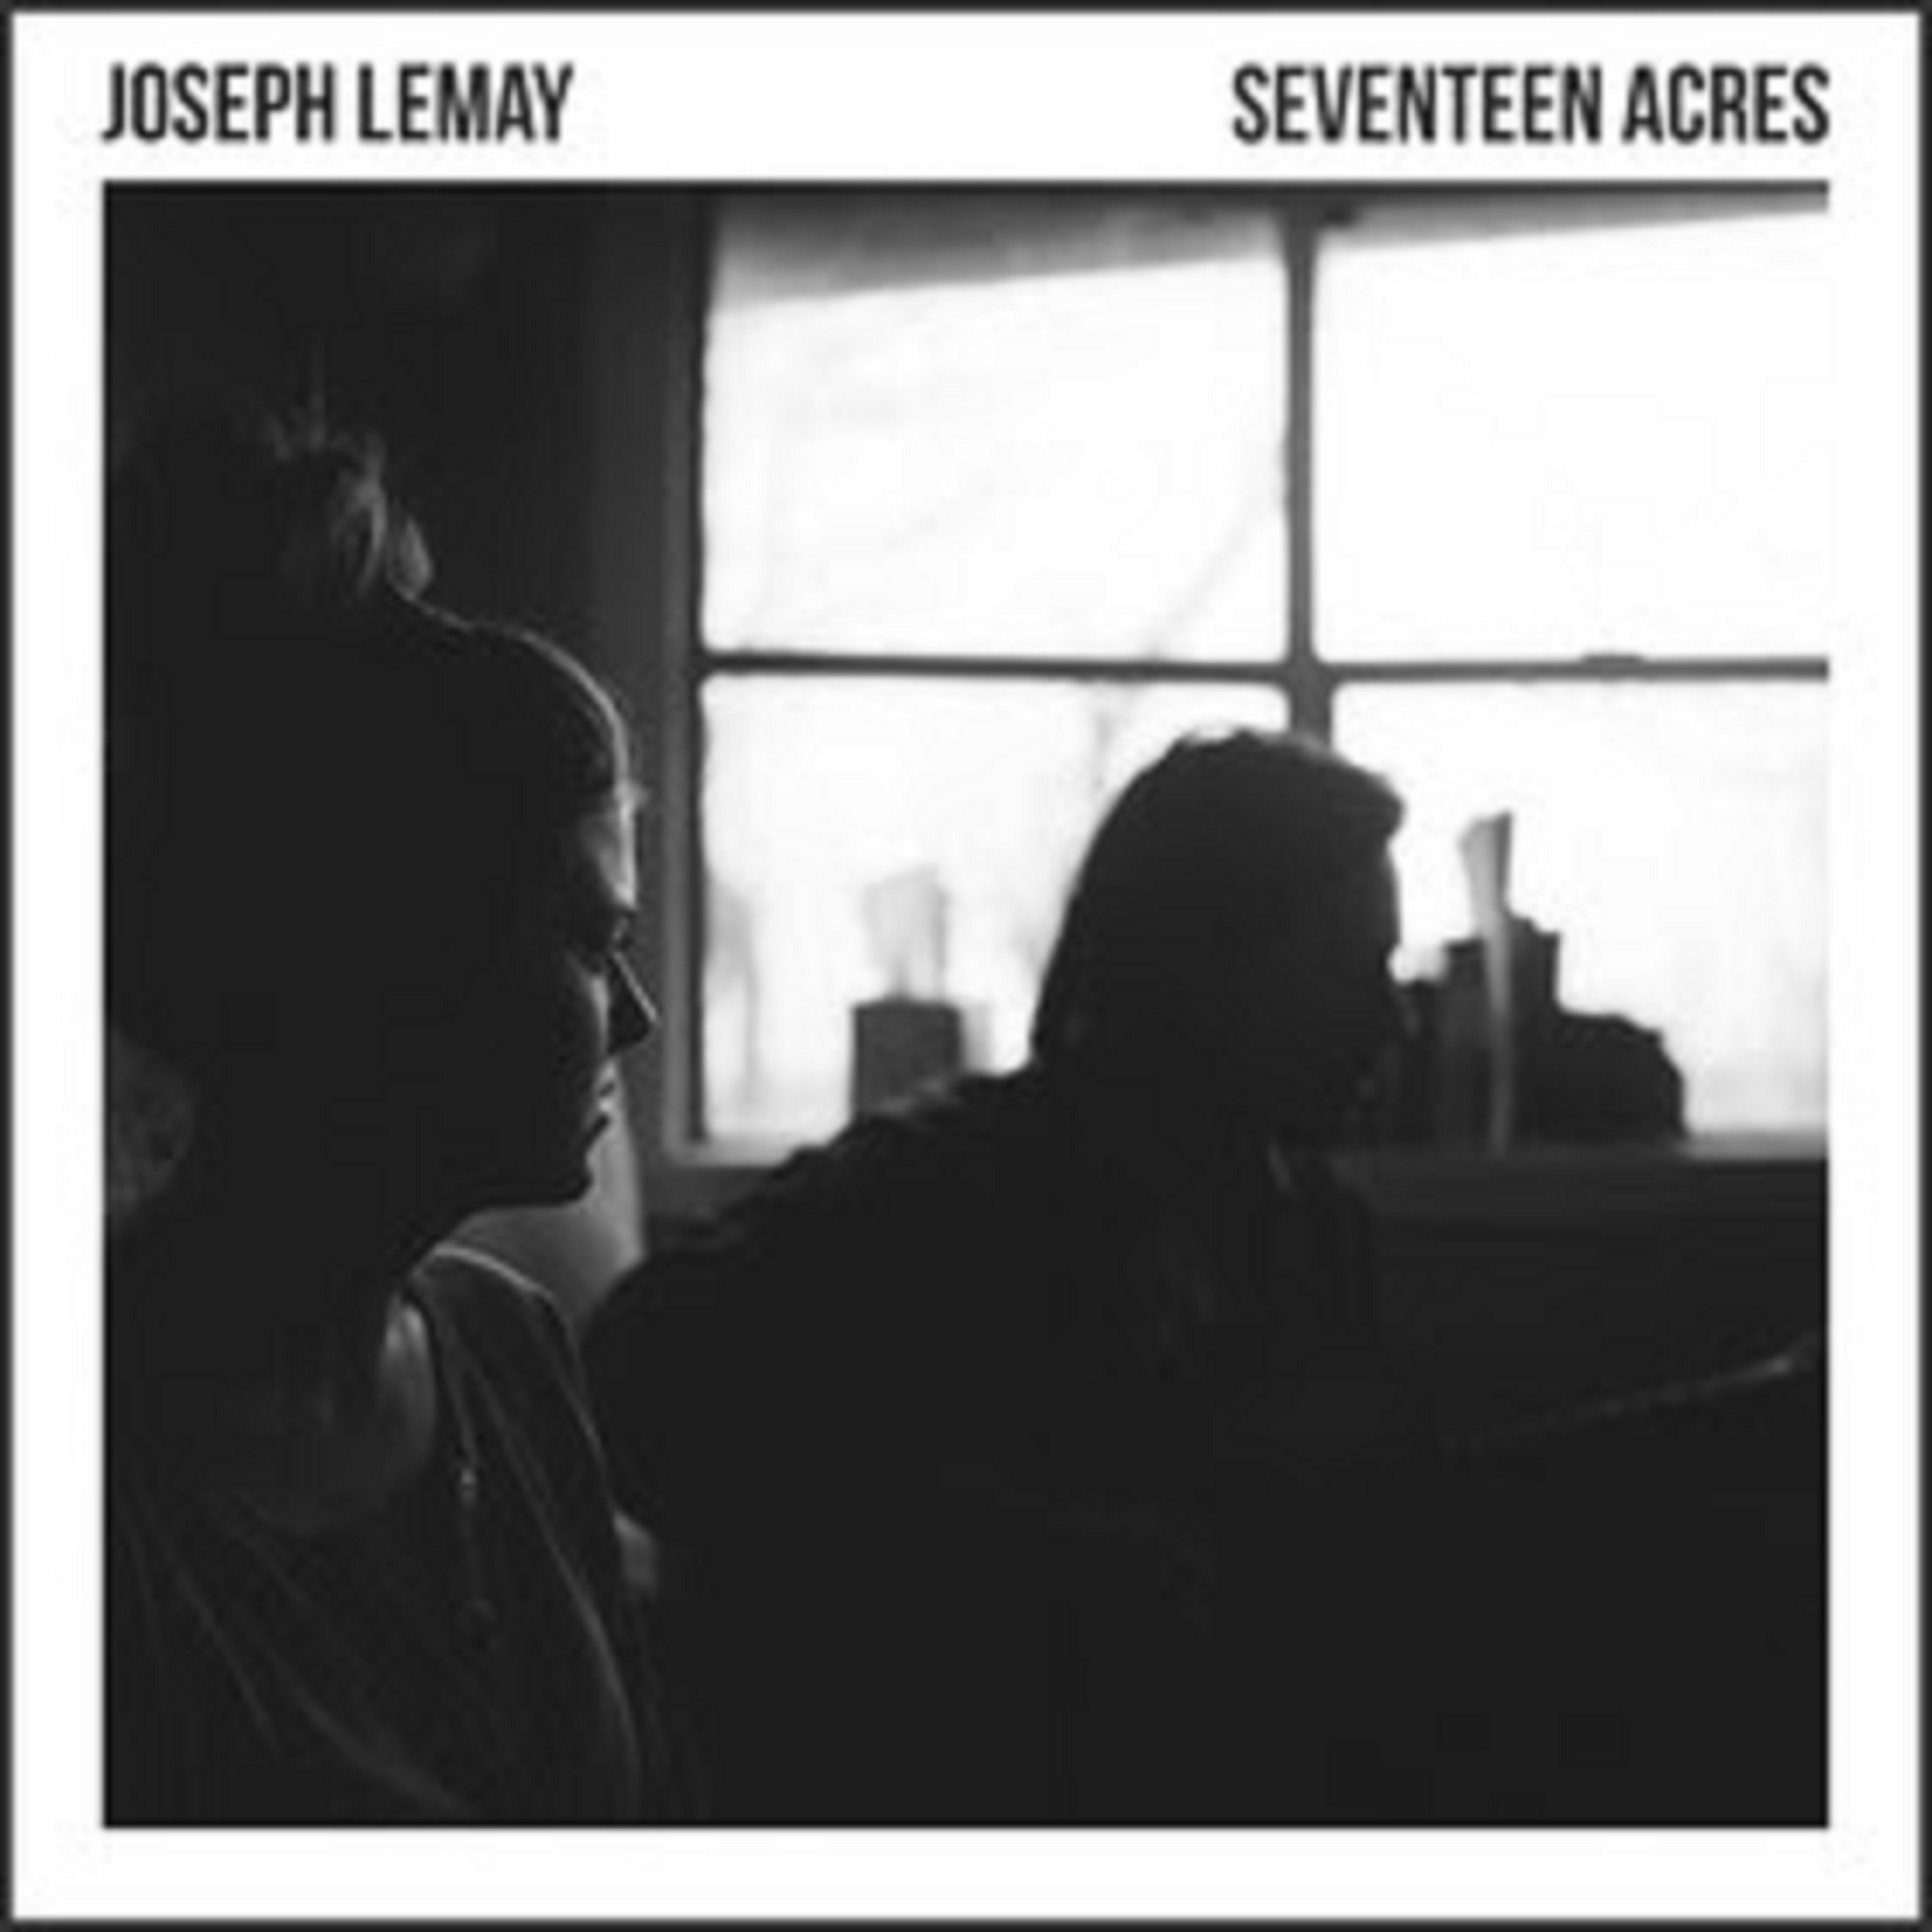 Joseph LeMay Communicates Truth, Doubt, Love across Seventeen Acres